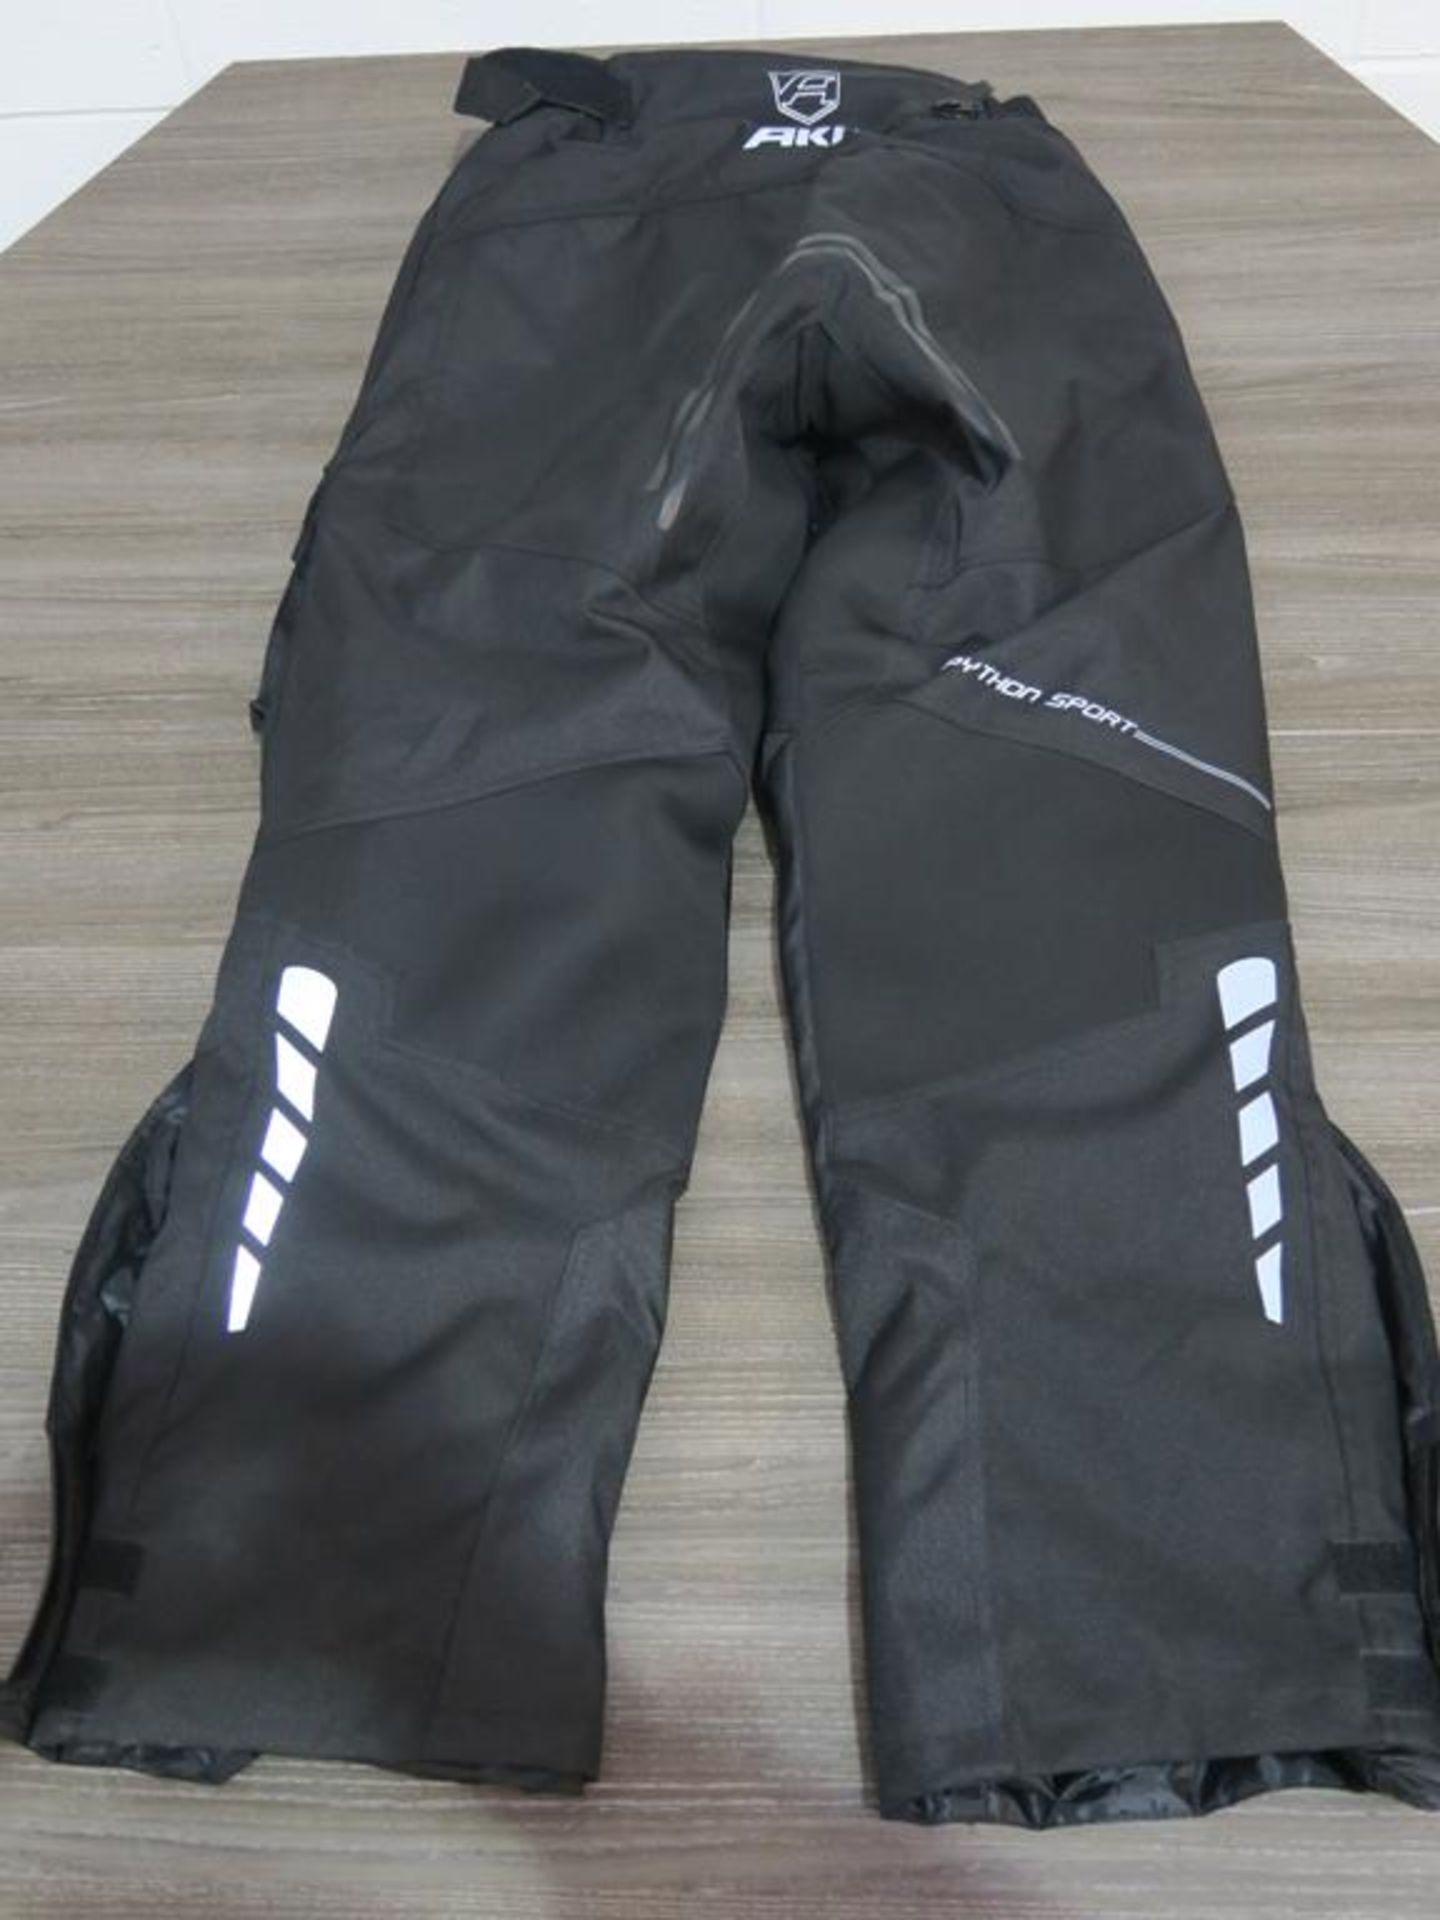 * Akito Python Sport Pants Black size XXL 183130XXL00 (RRP £80) - Image 2 of 2